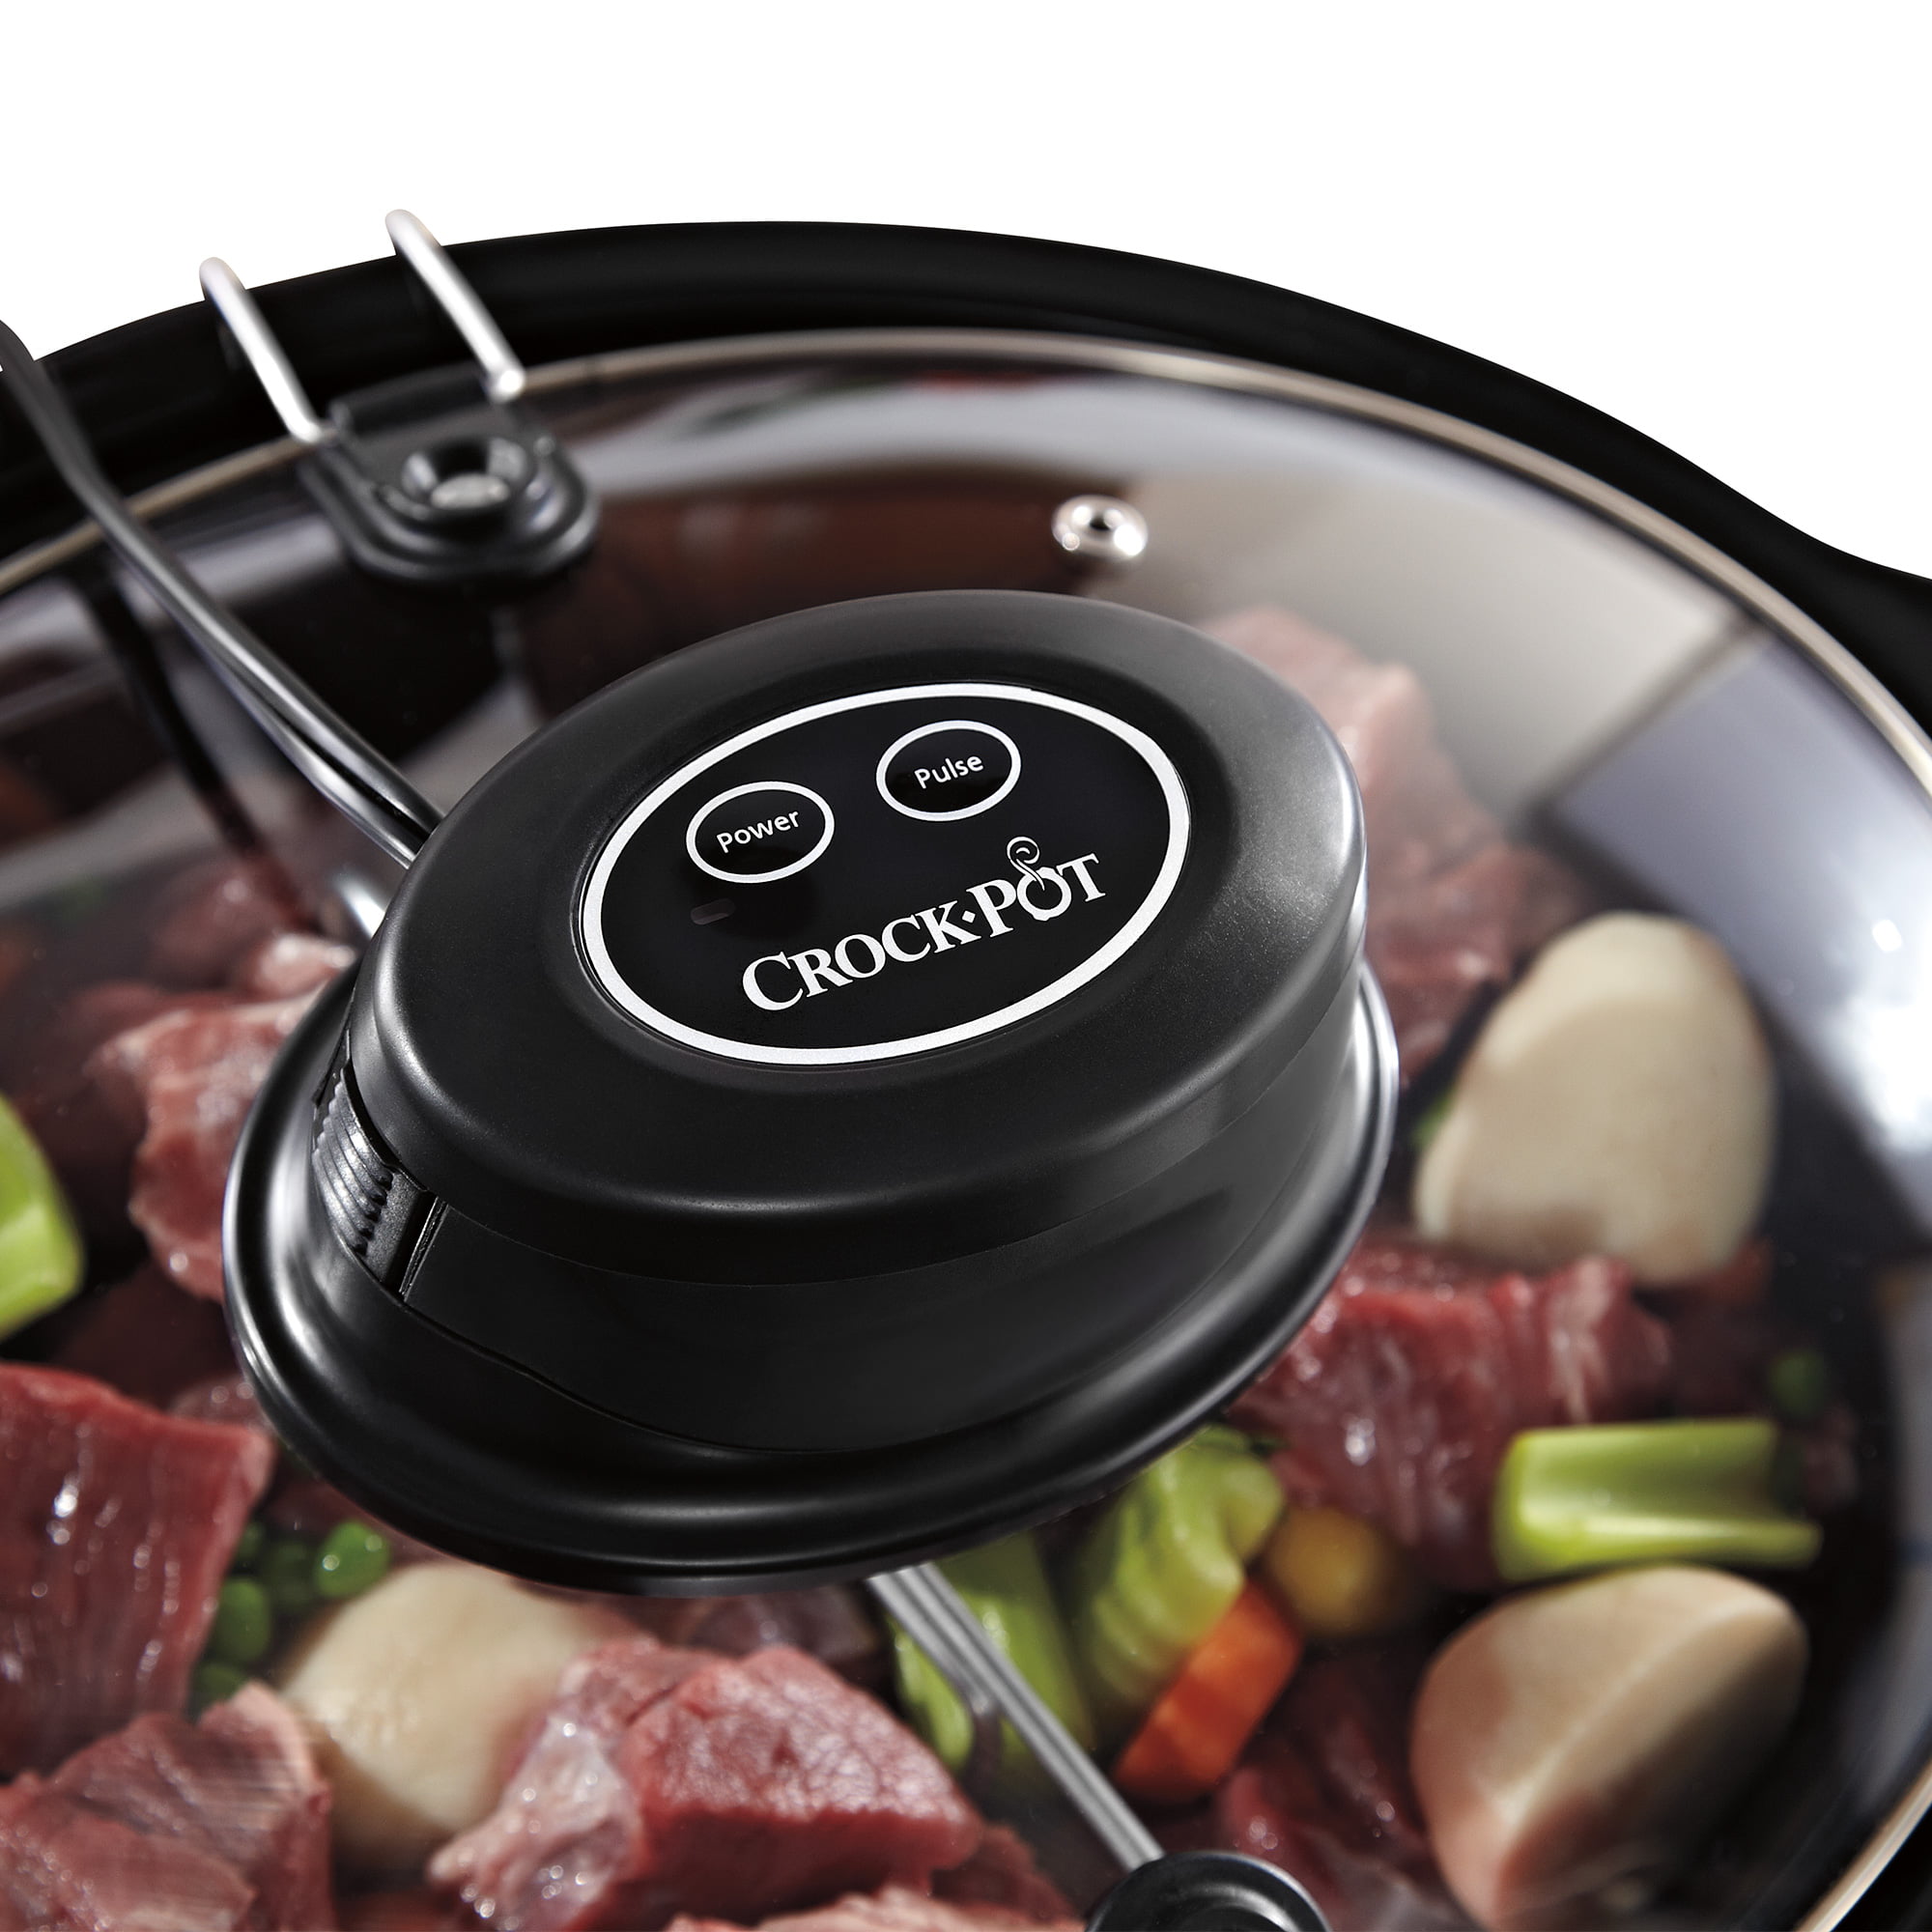 Crock Pot Crock-Pot Digital Slow Cooker with iStir Automatic Stirring  System Reviews 2024